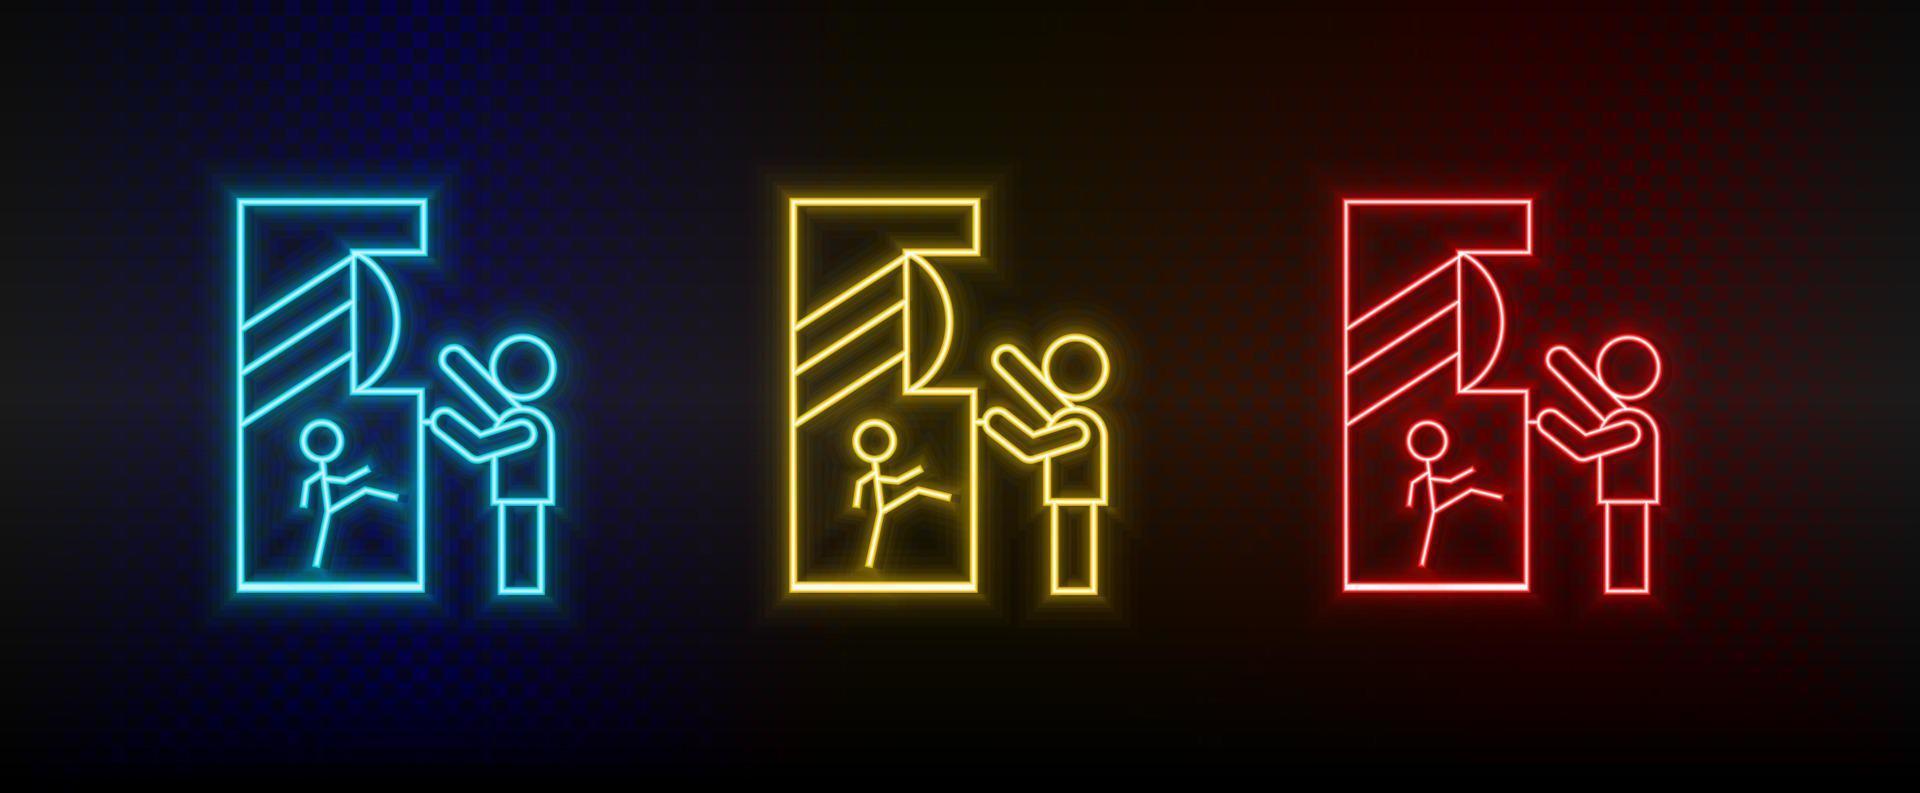 Neon icons. Child gamer retro console arcade. Set of red, blue, yellow neon vector icon on darken background